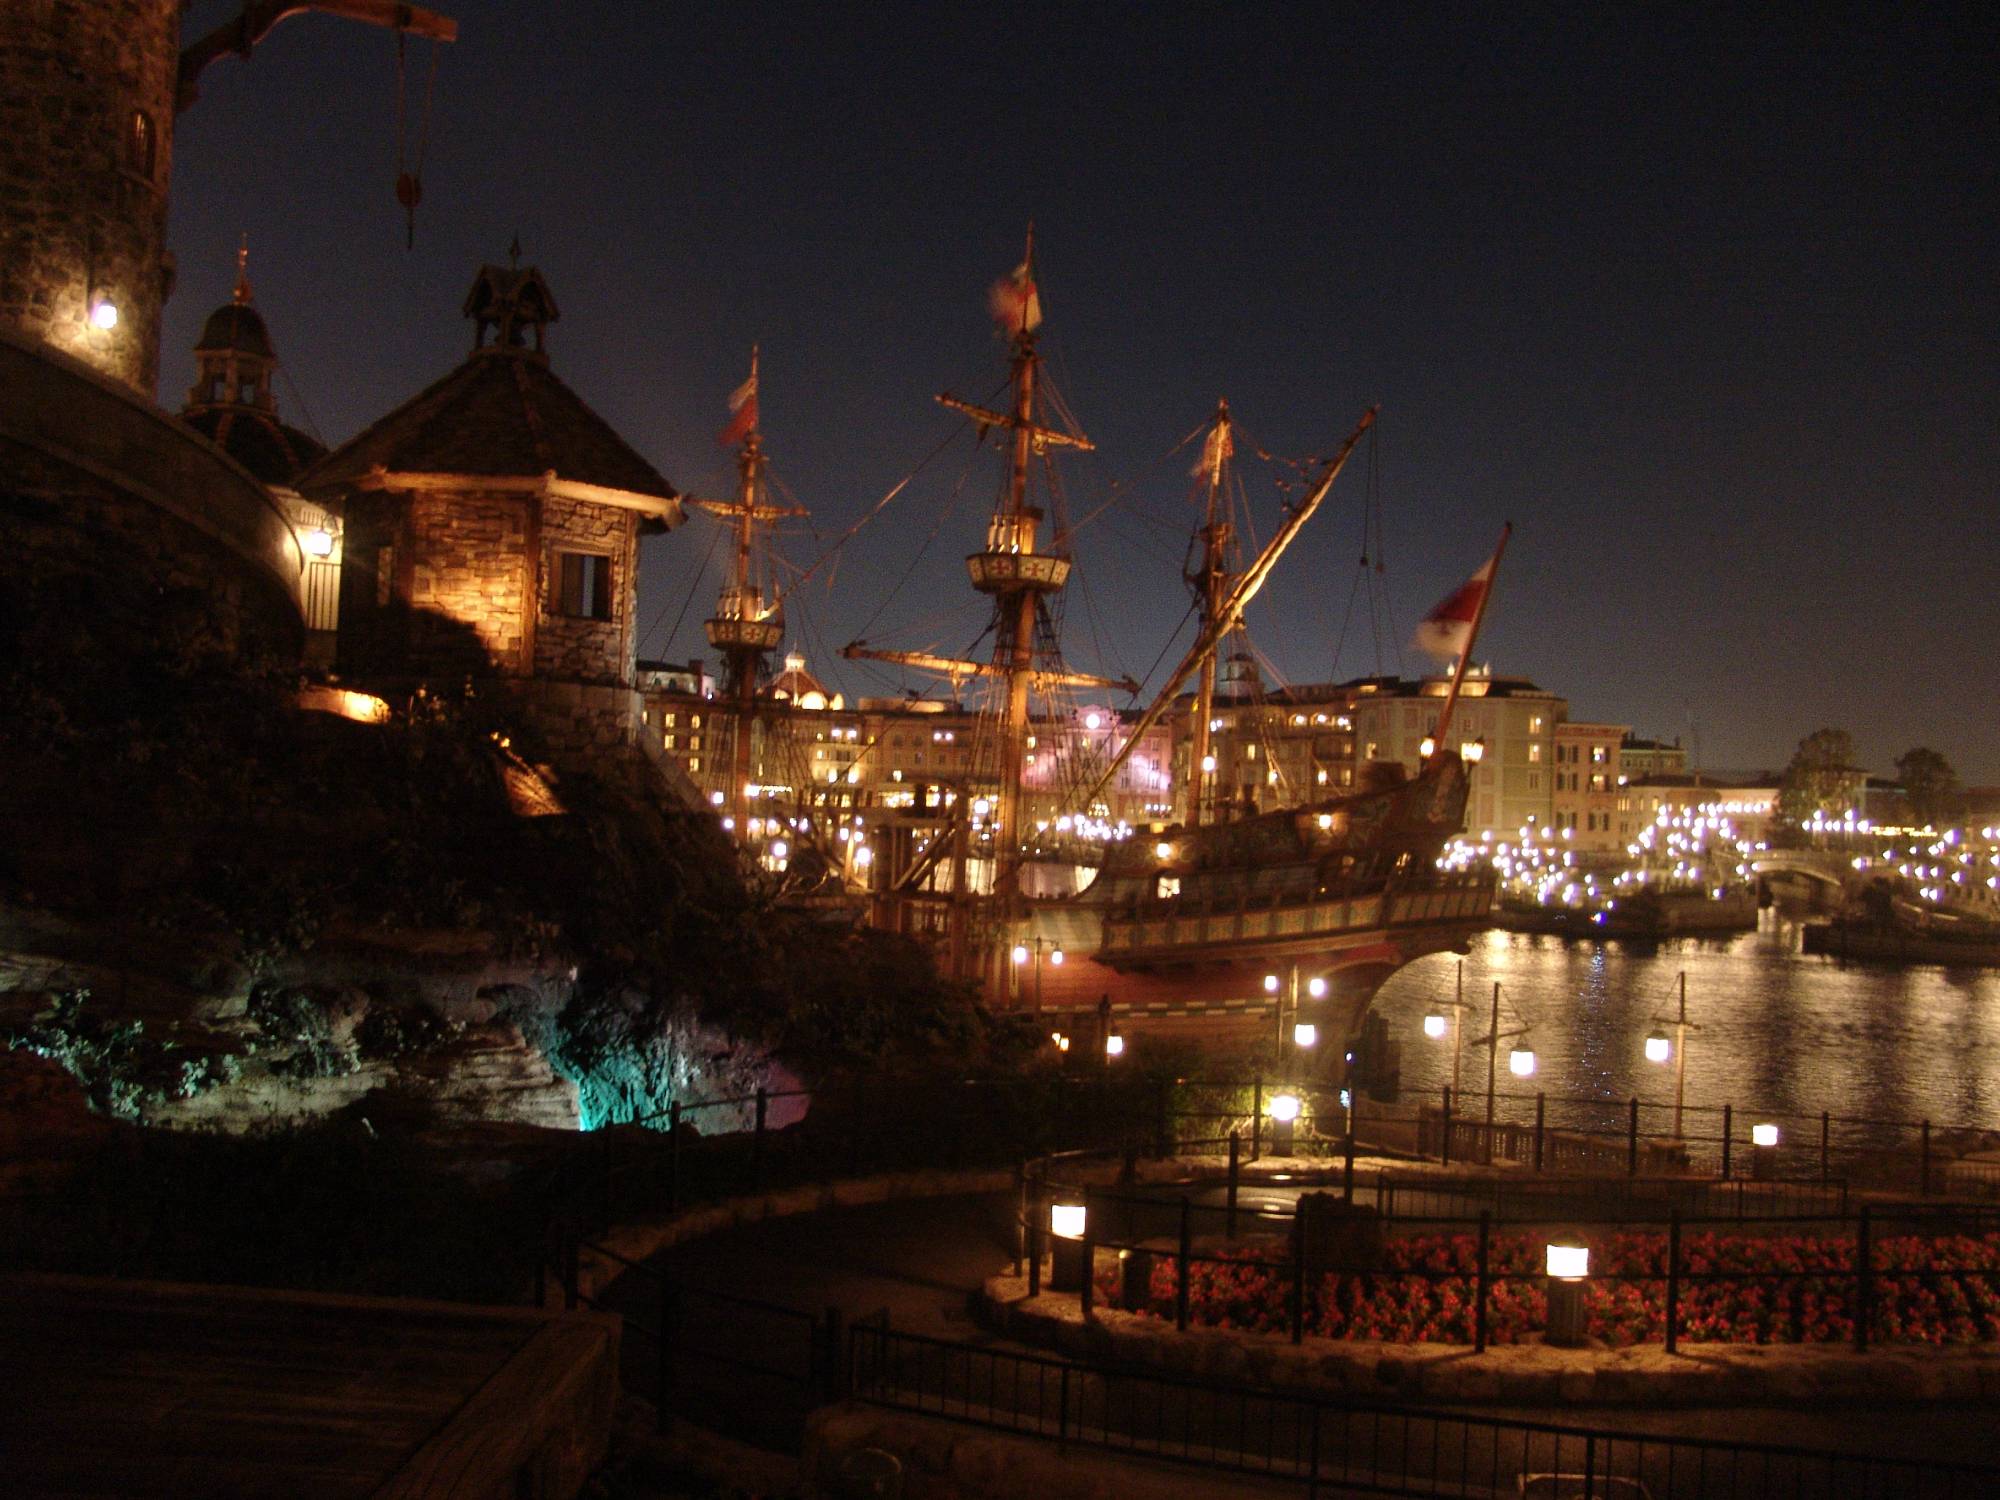 Tokyo DisneySea - Renaissance sailing ship